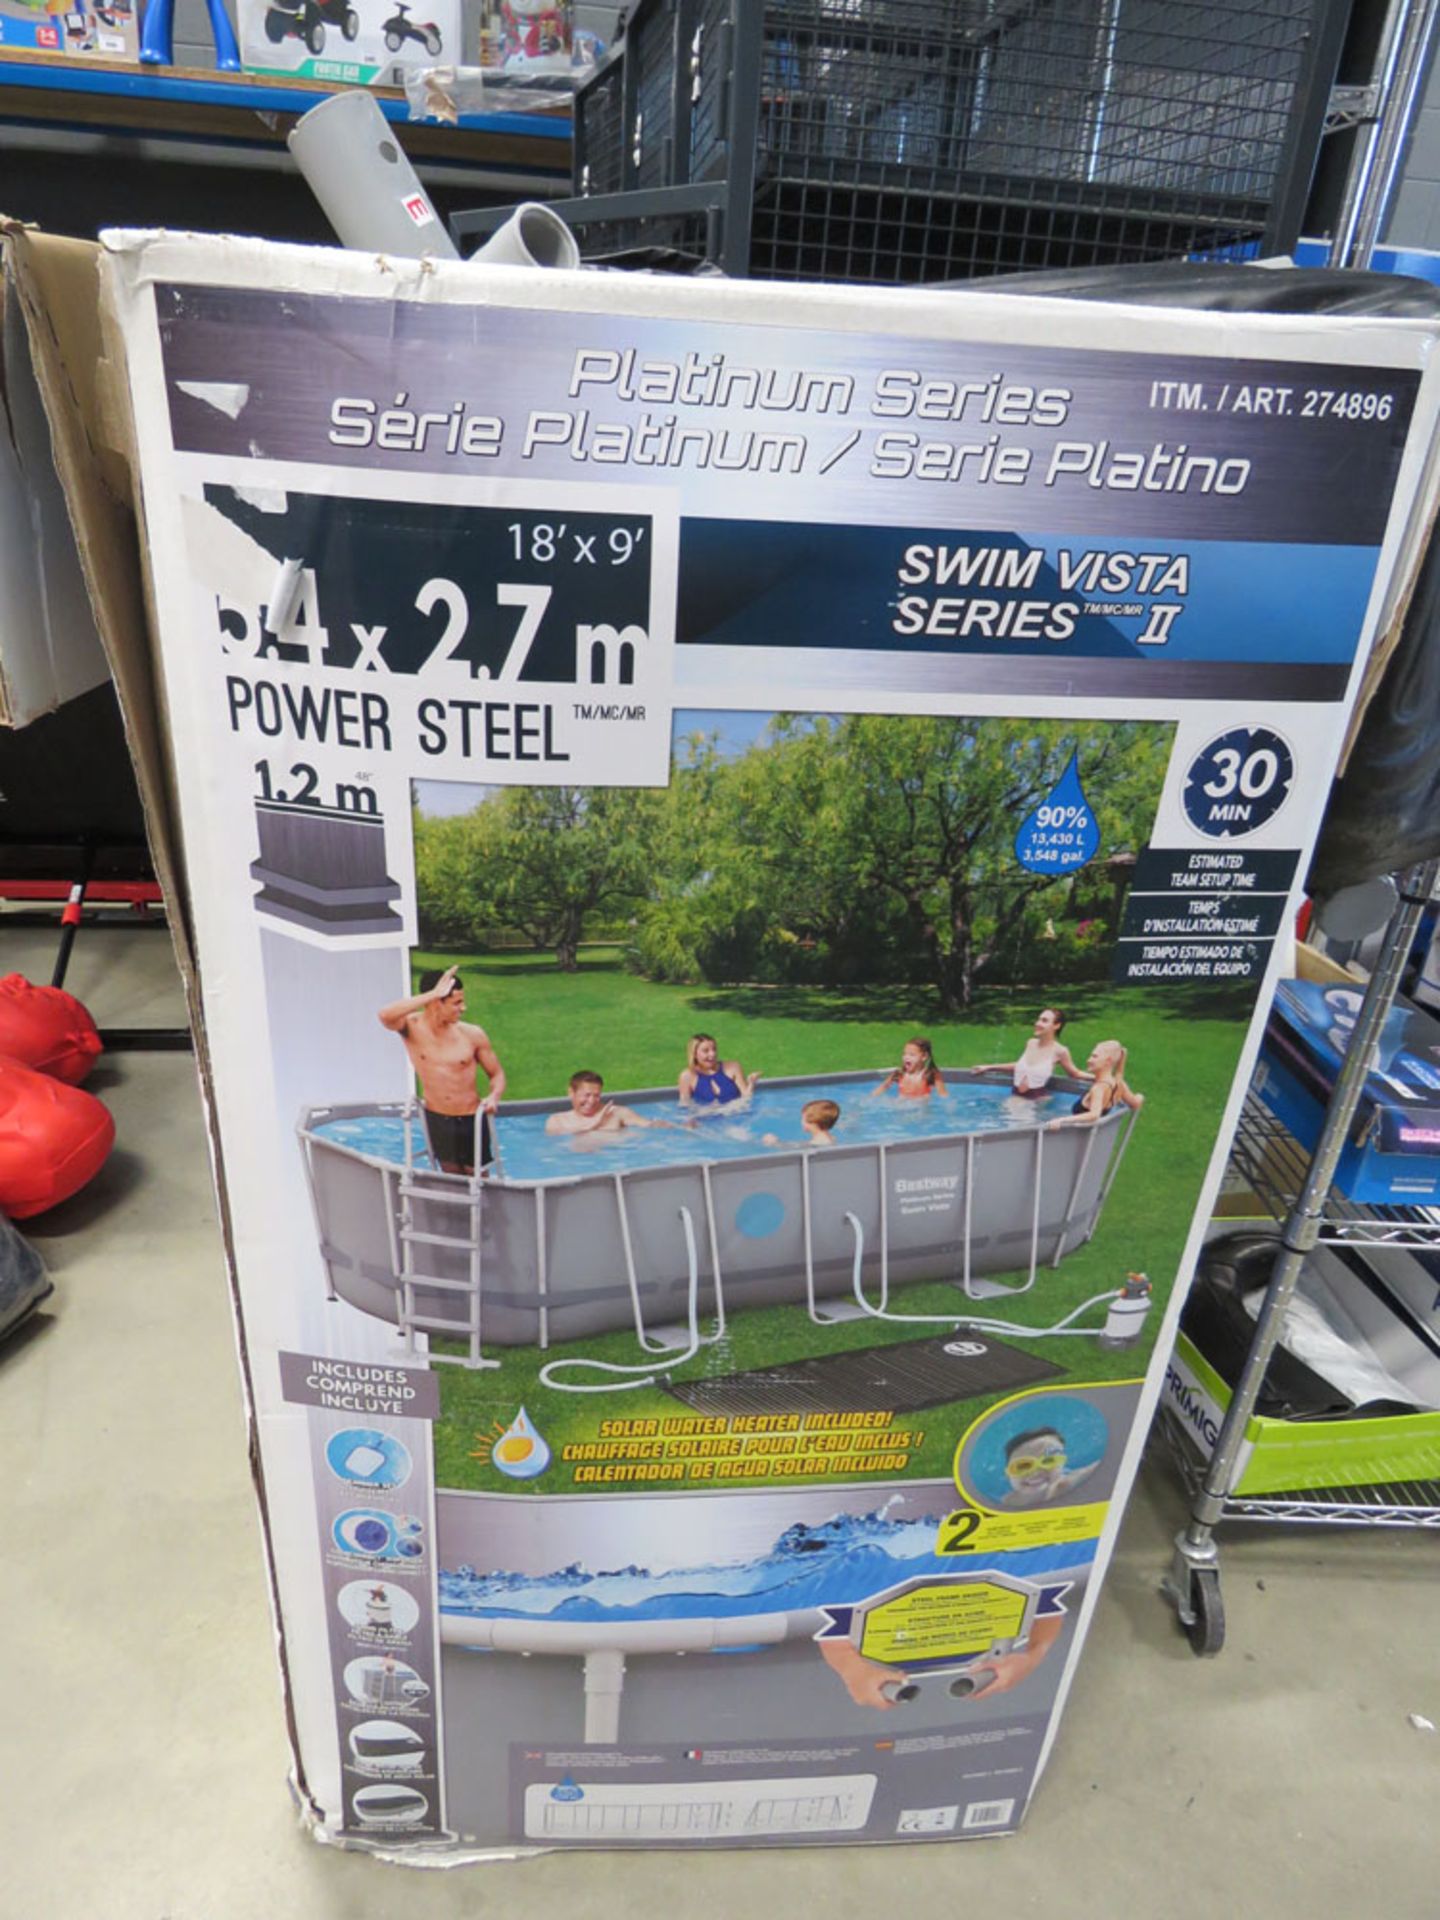 Platinum Series power steel frame swimming pool in box